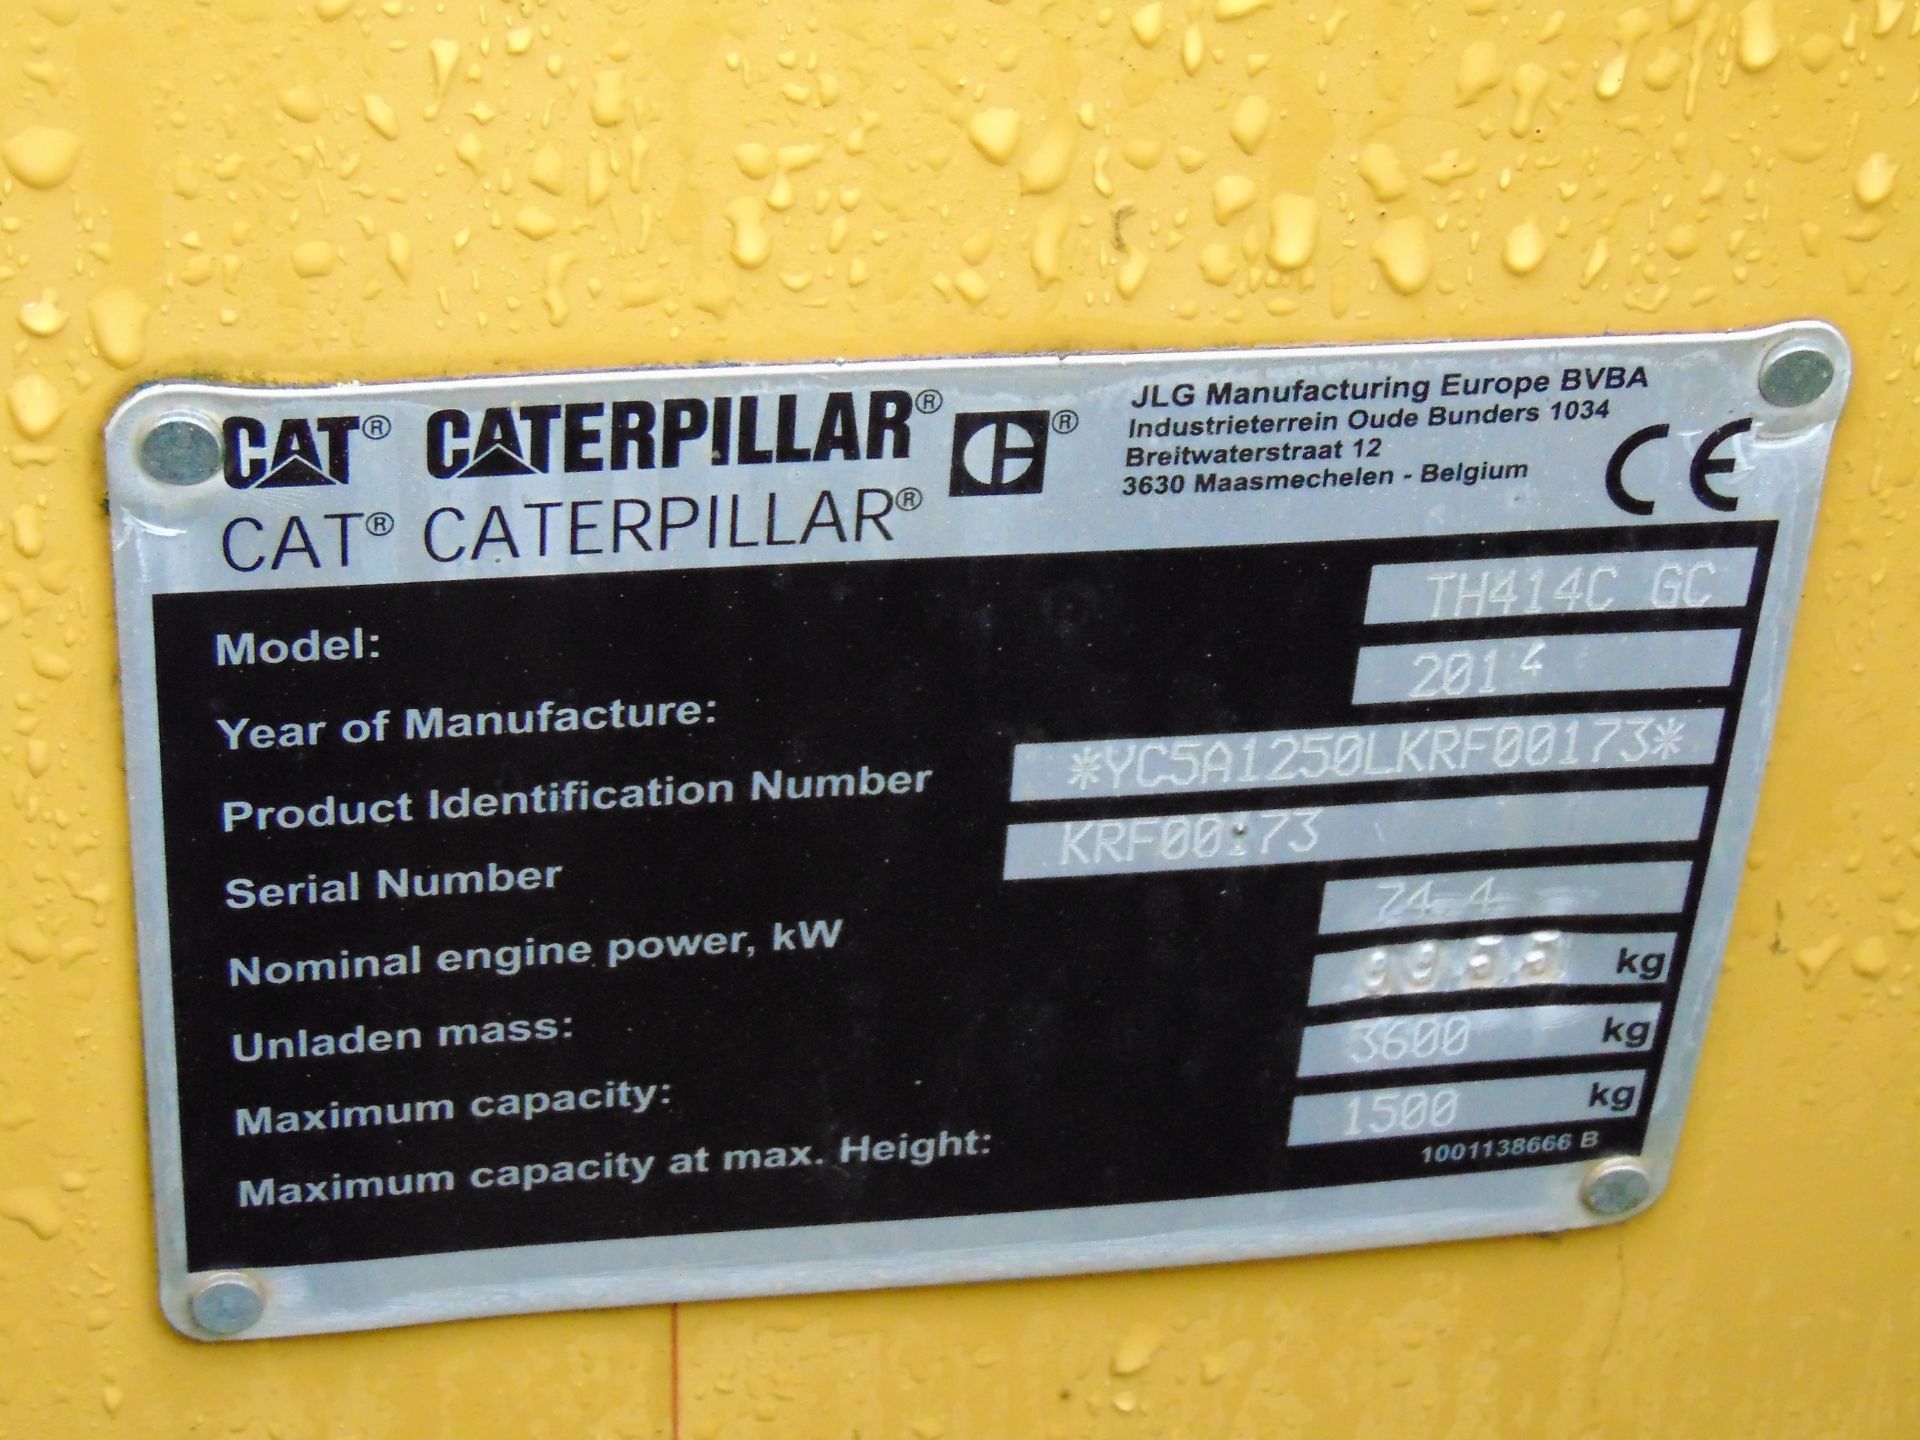 2014 Caterpillar TH414C GC 3.6 ton Telehandler ONLY 1,382 HOURS! - Image 33 of 33